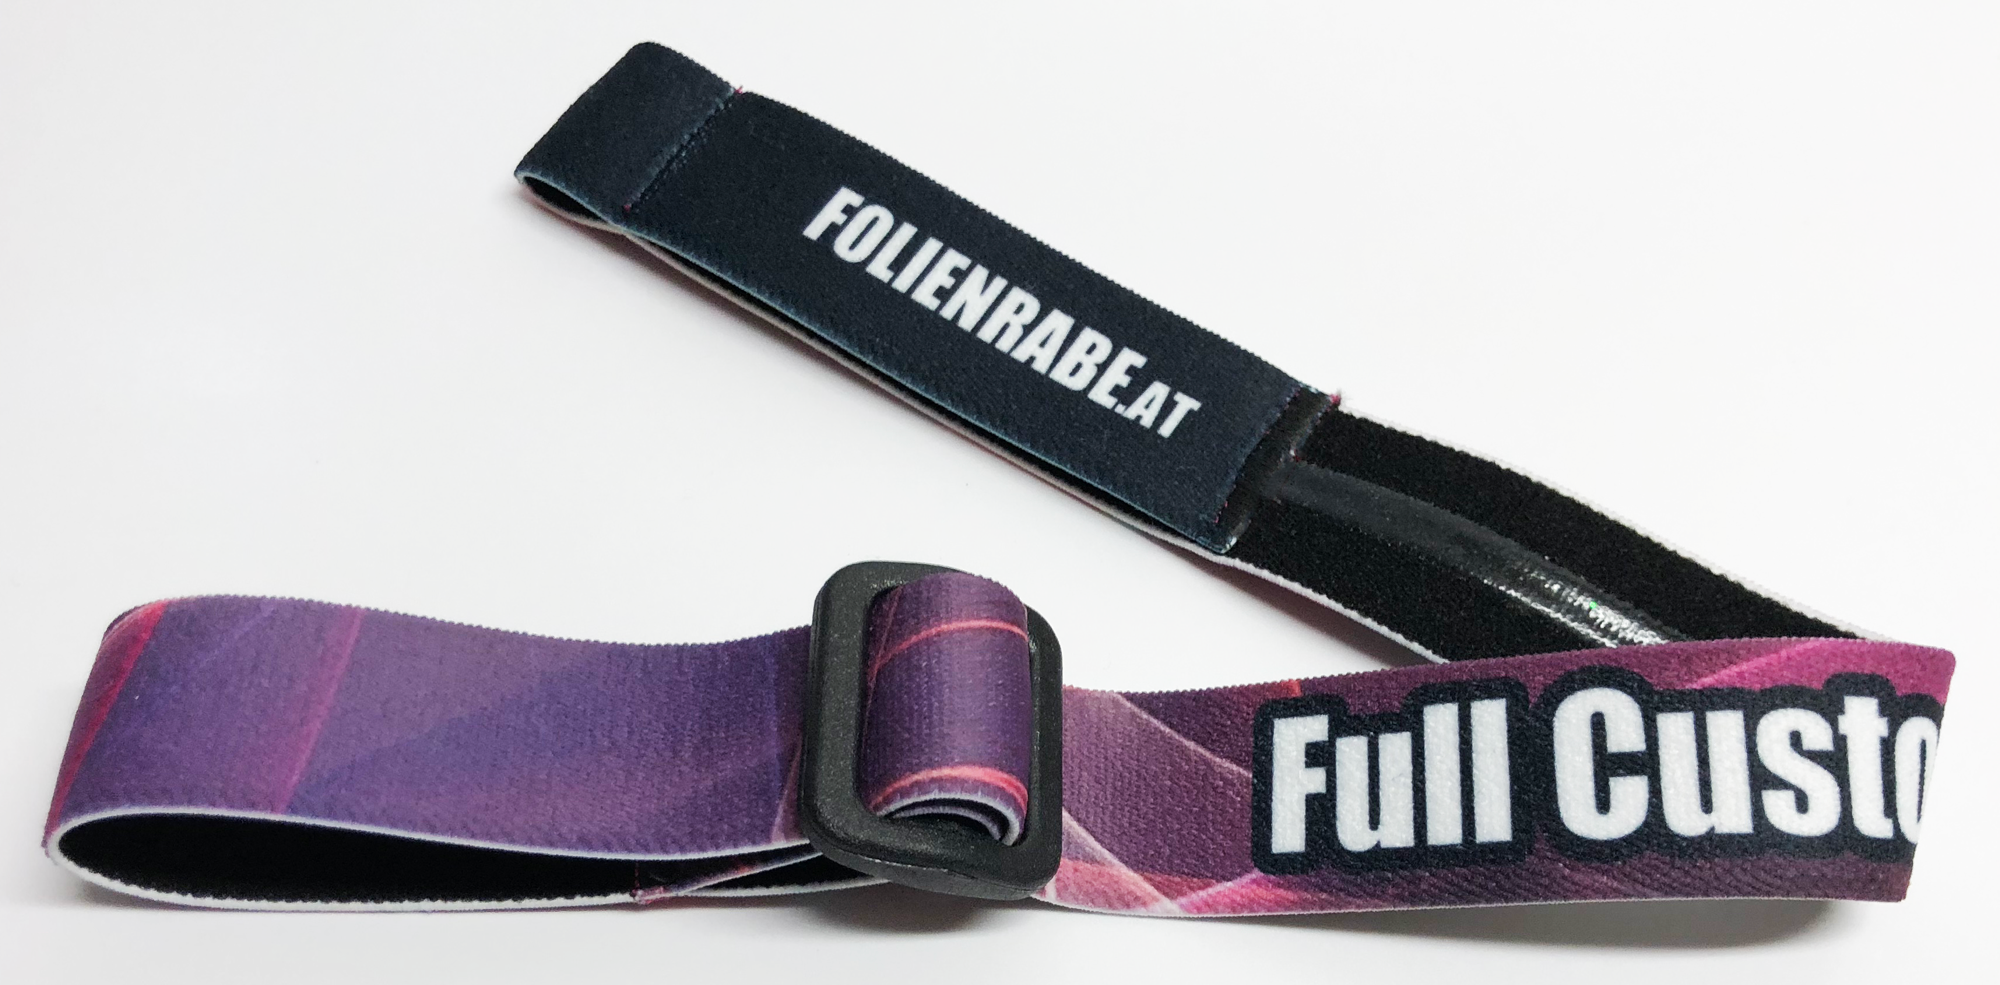 Folienrabe - Custom FPV goggle strap